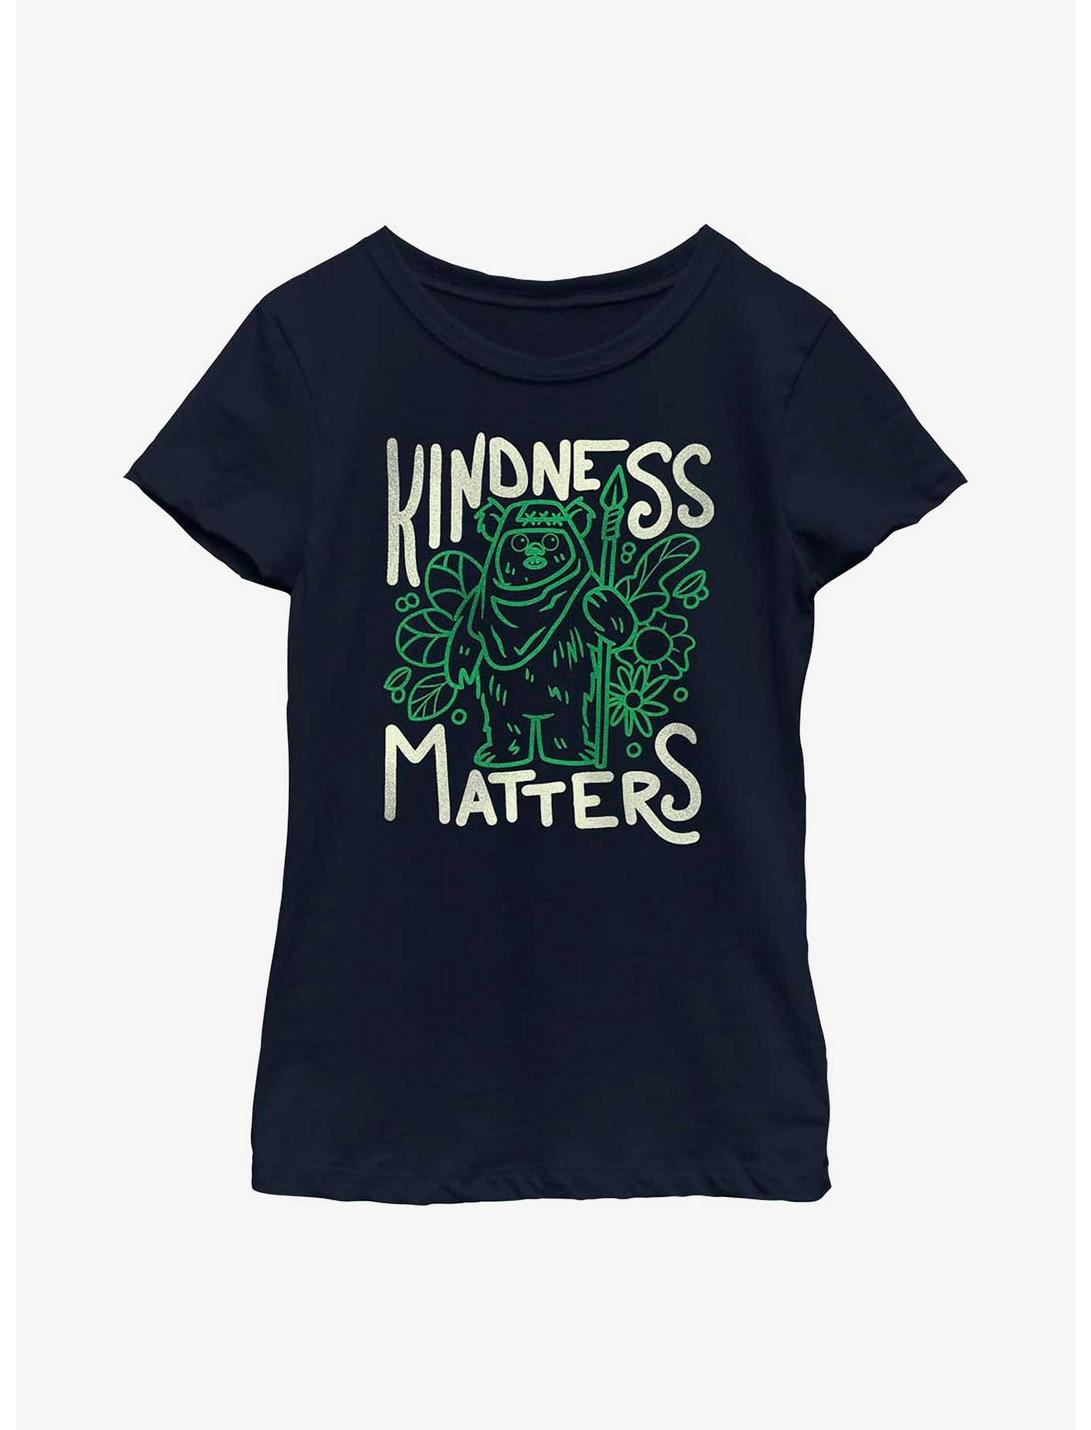 Star Wars Ewok Kindness Youth Girls T-Shirt, BLACK, hi-res